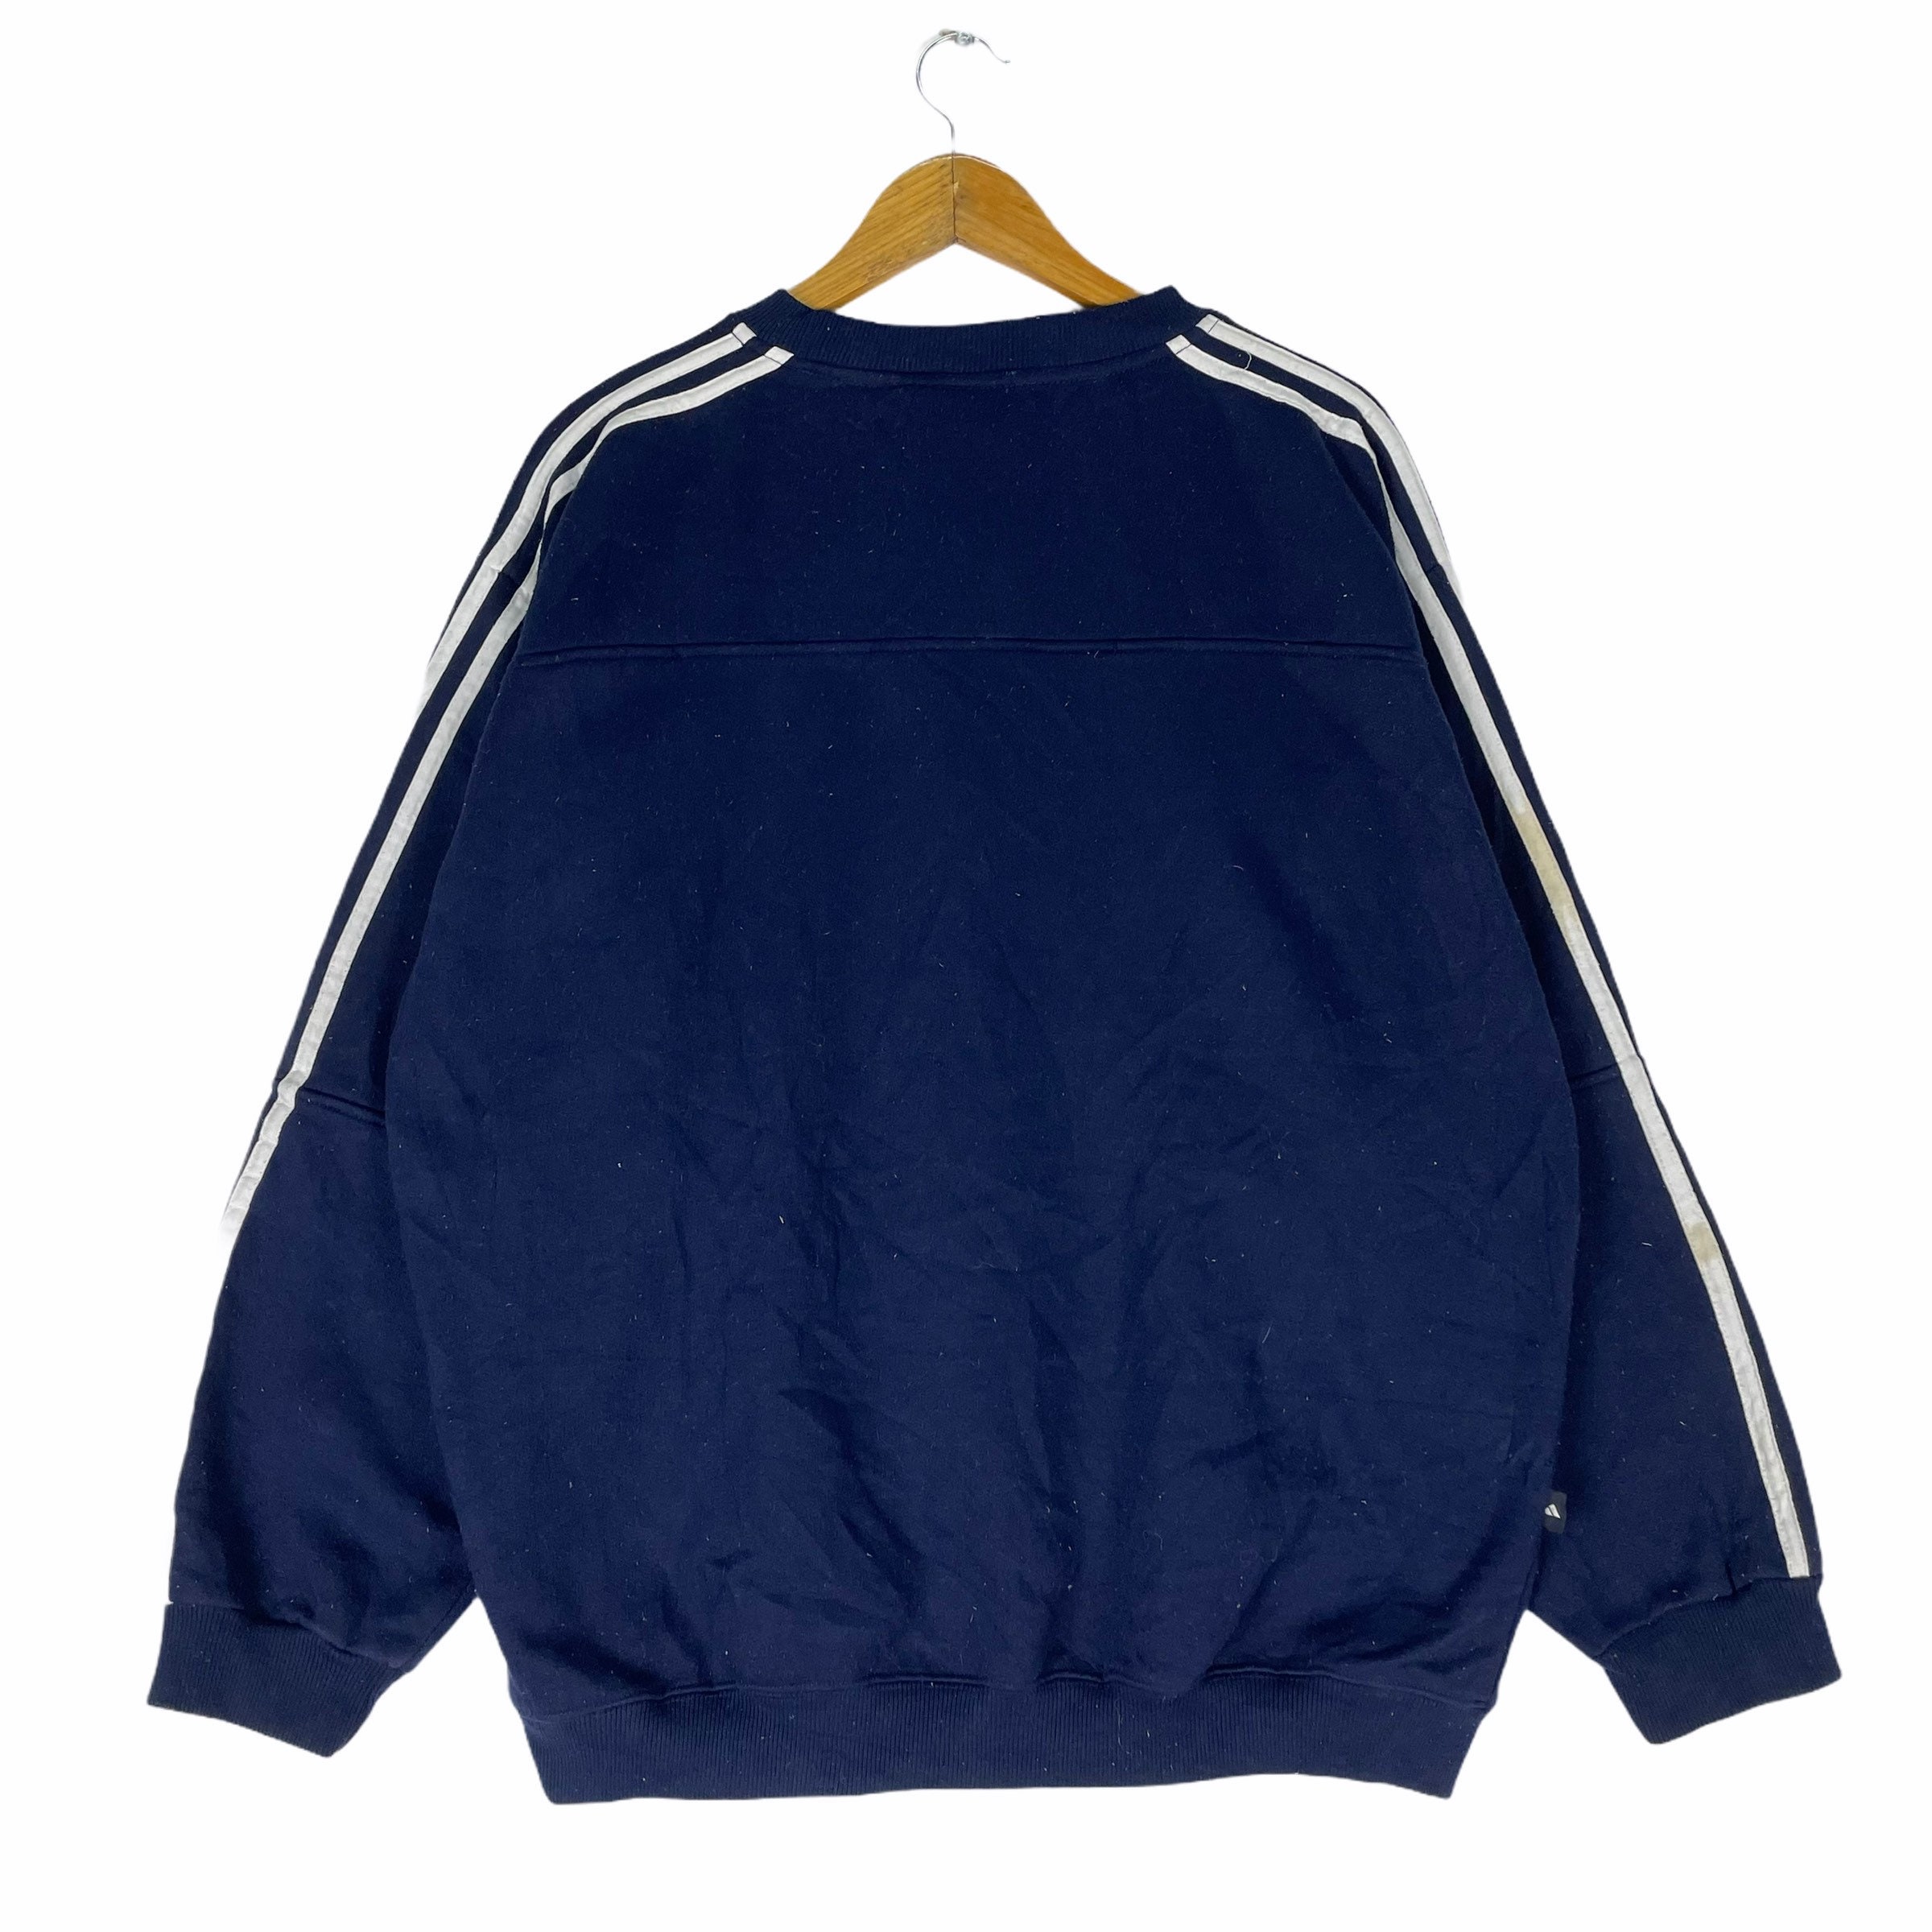 Vintage 90s Adidas Equipment Sweatshirt Navy Blue Colour - Etsy